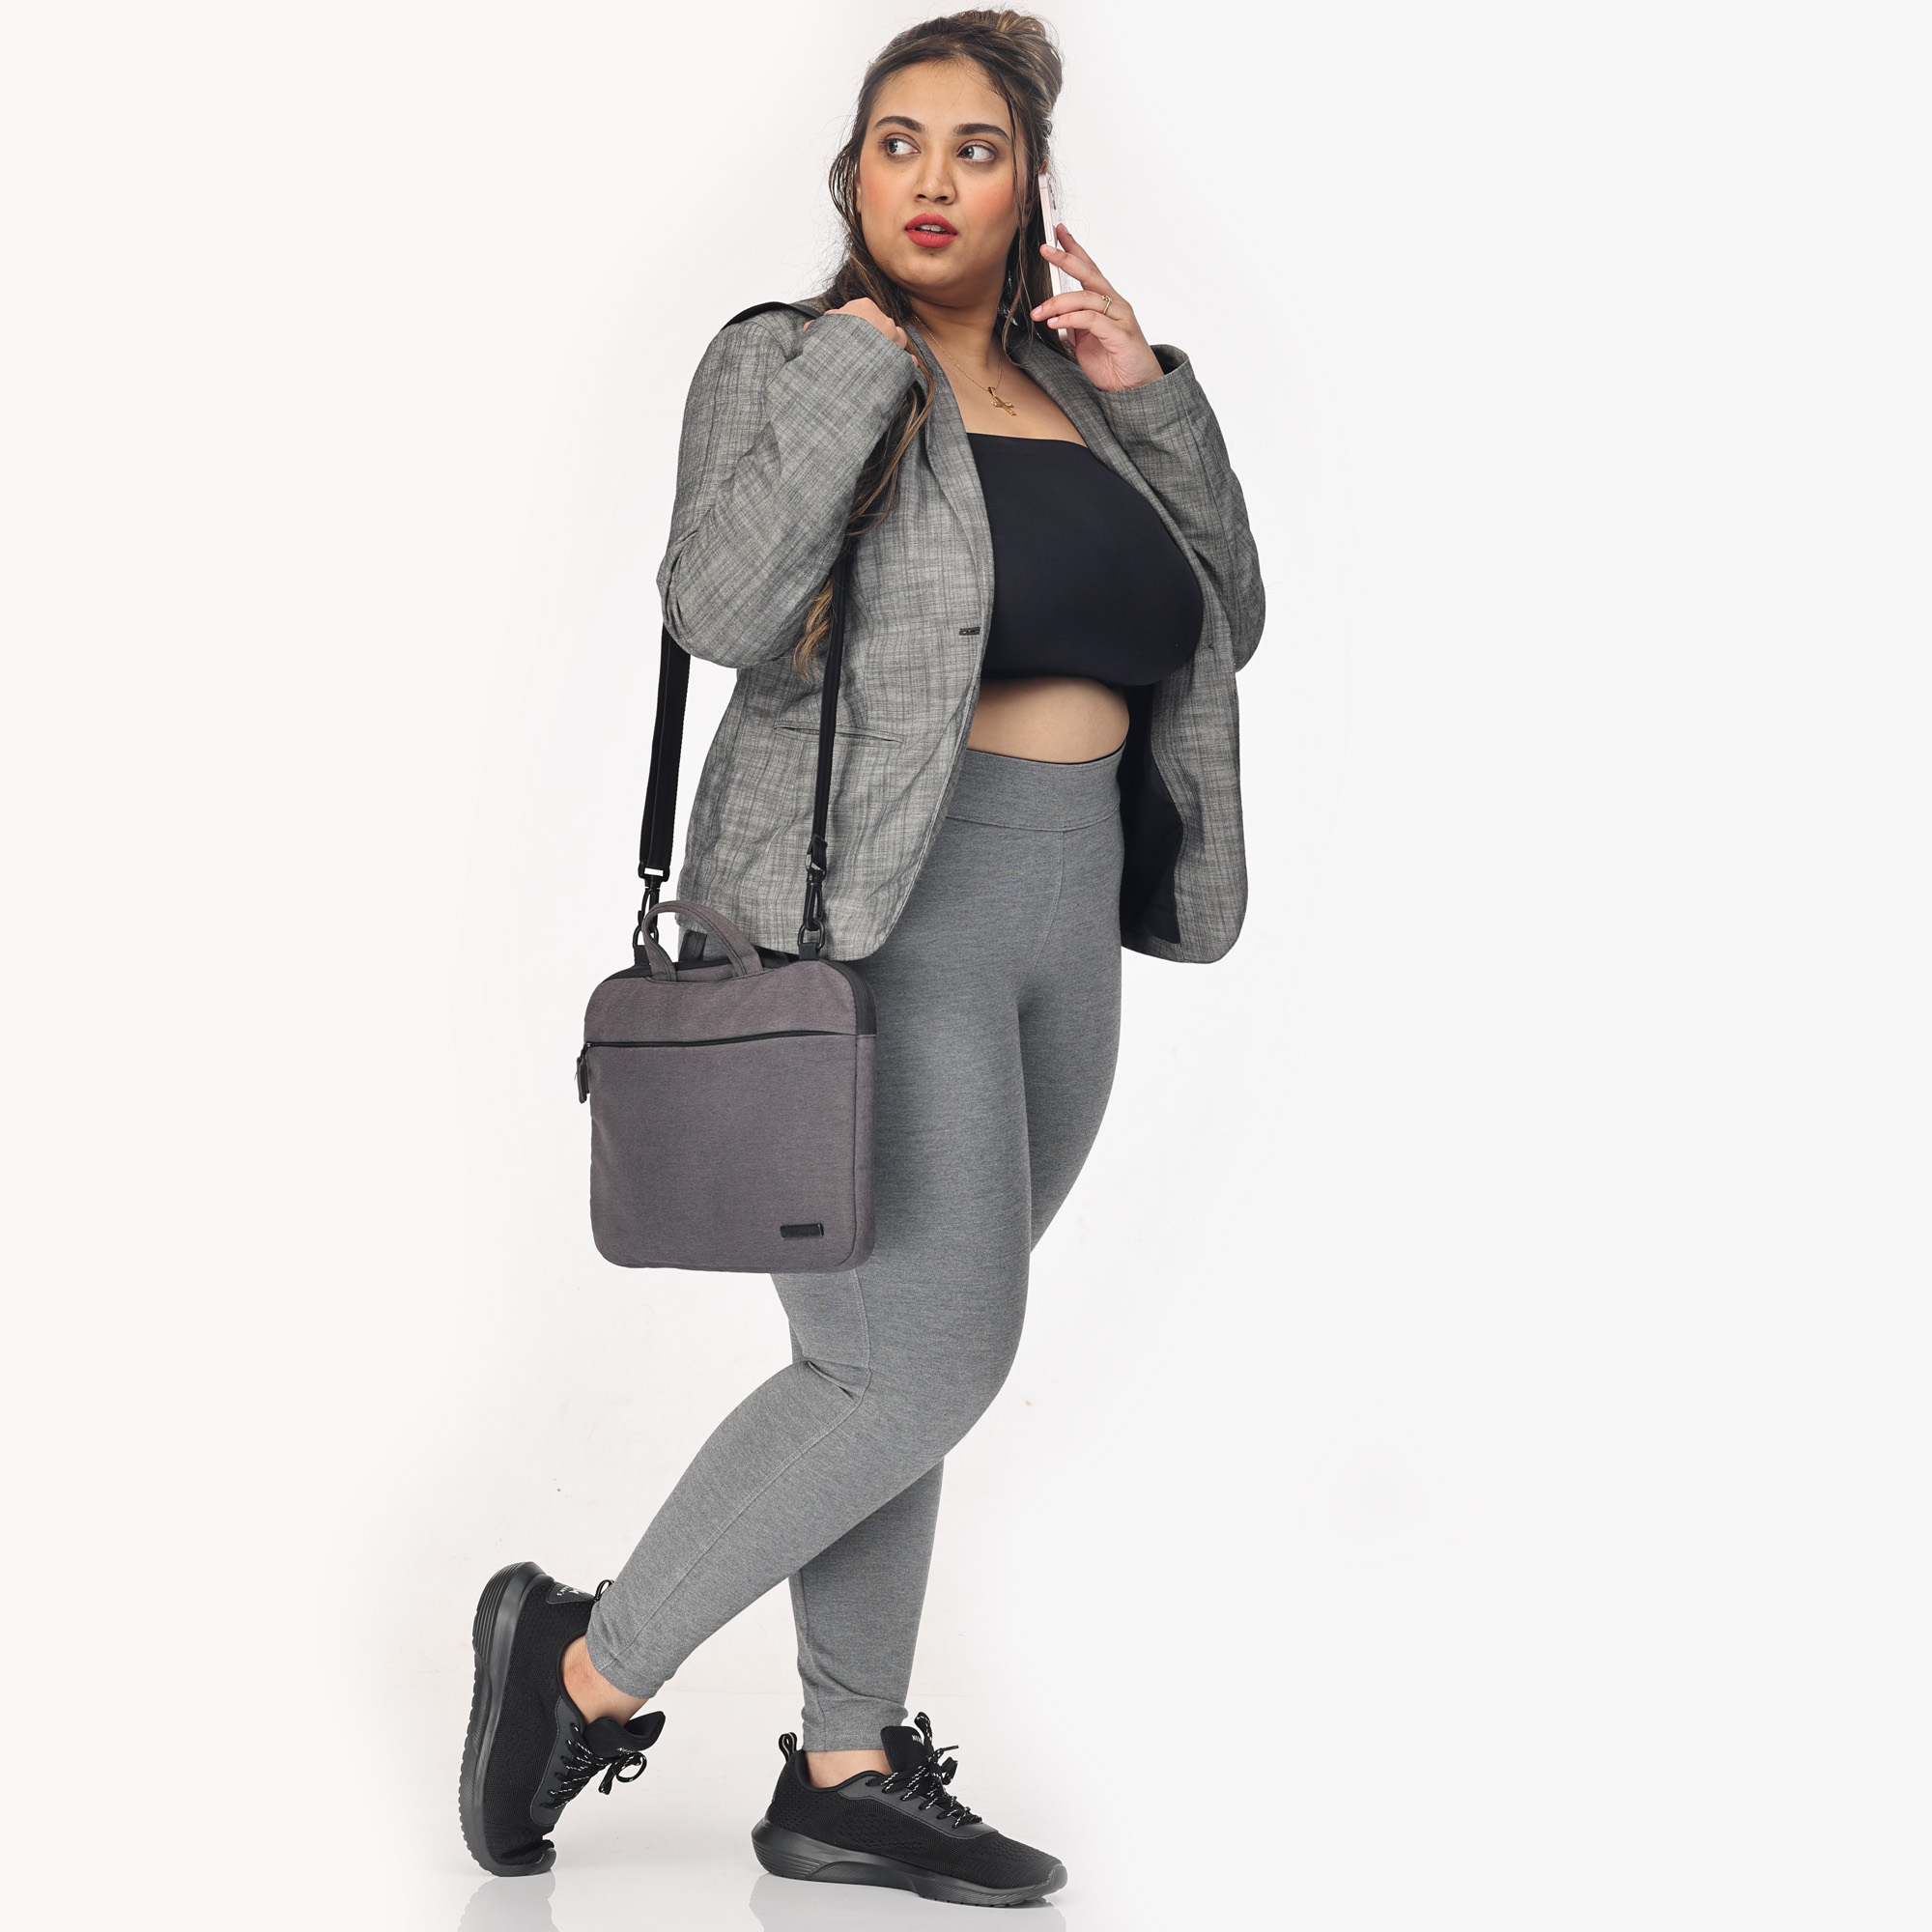 Grey jeggings women Plus size compression pant 2 back pockets